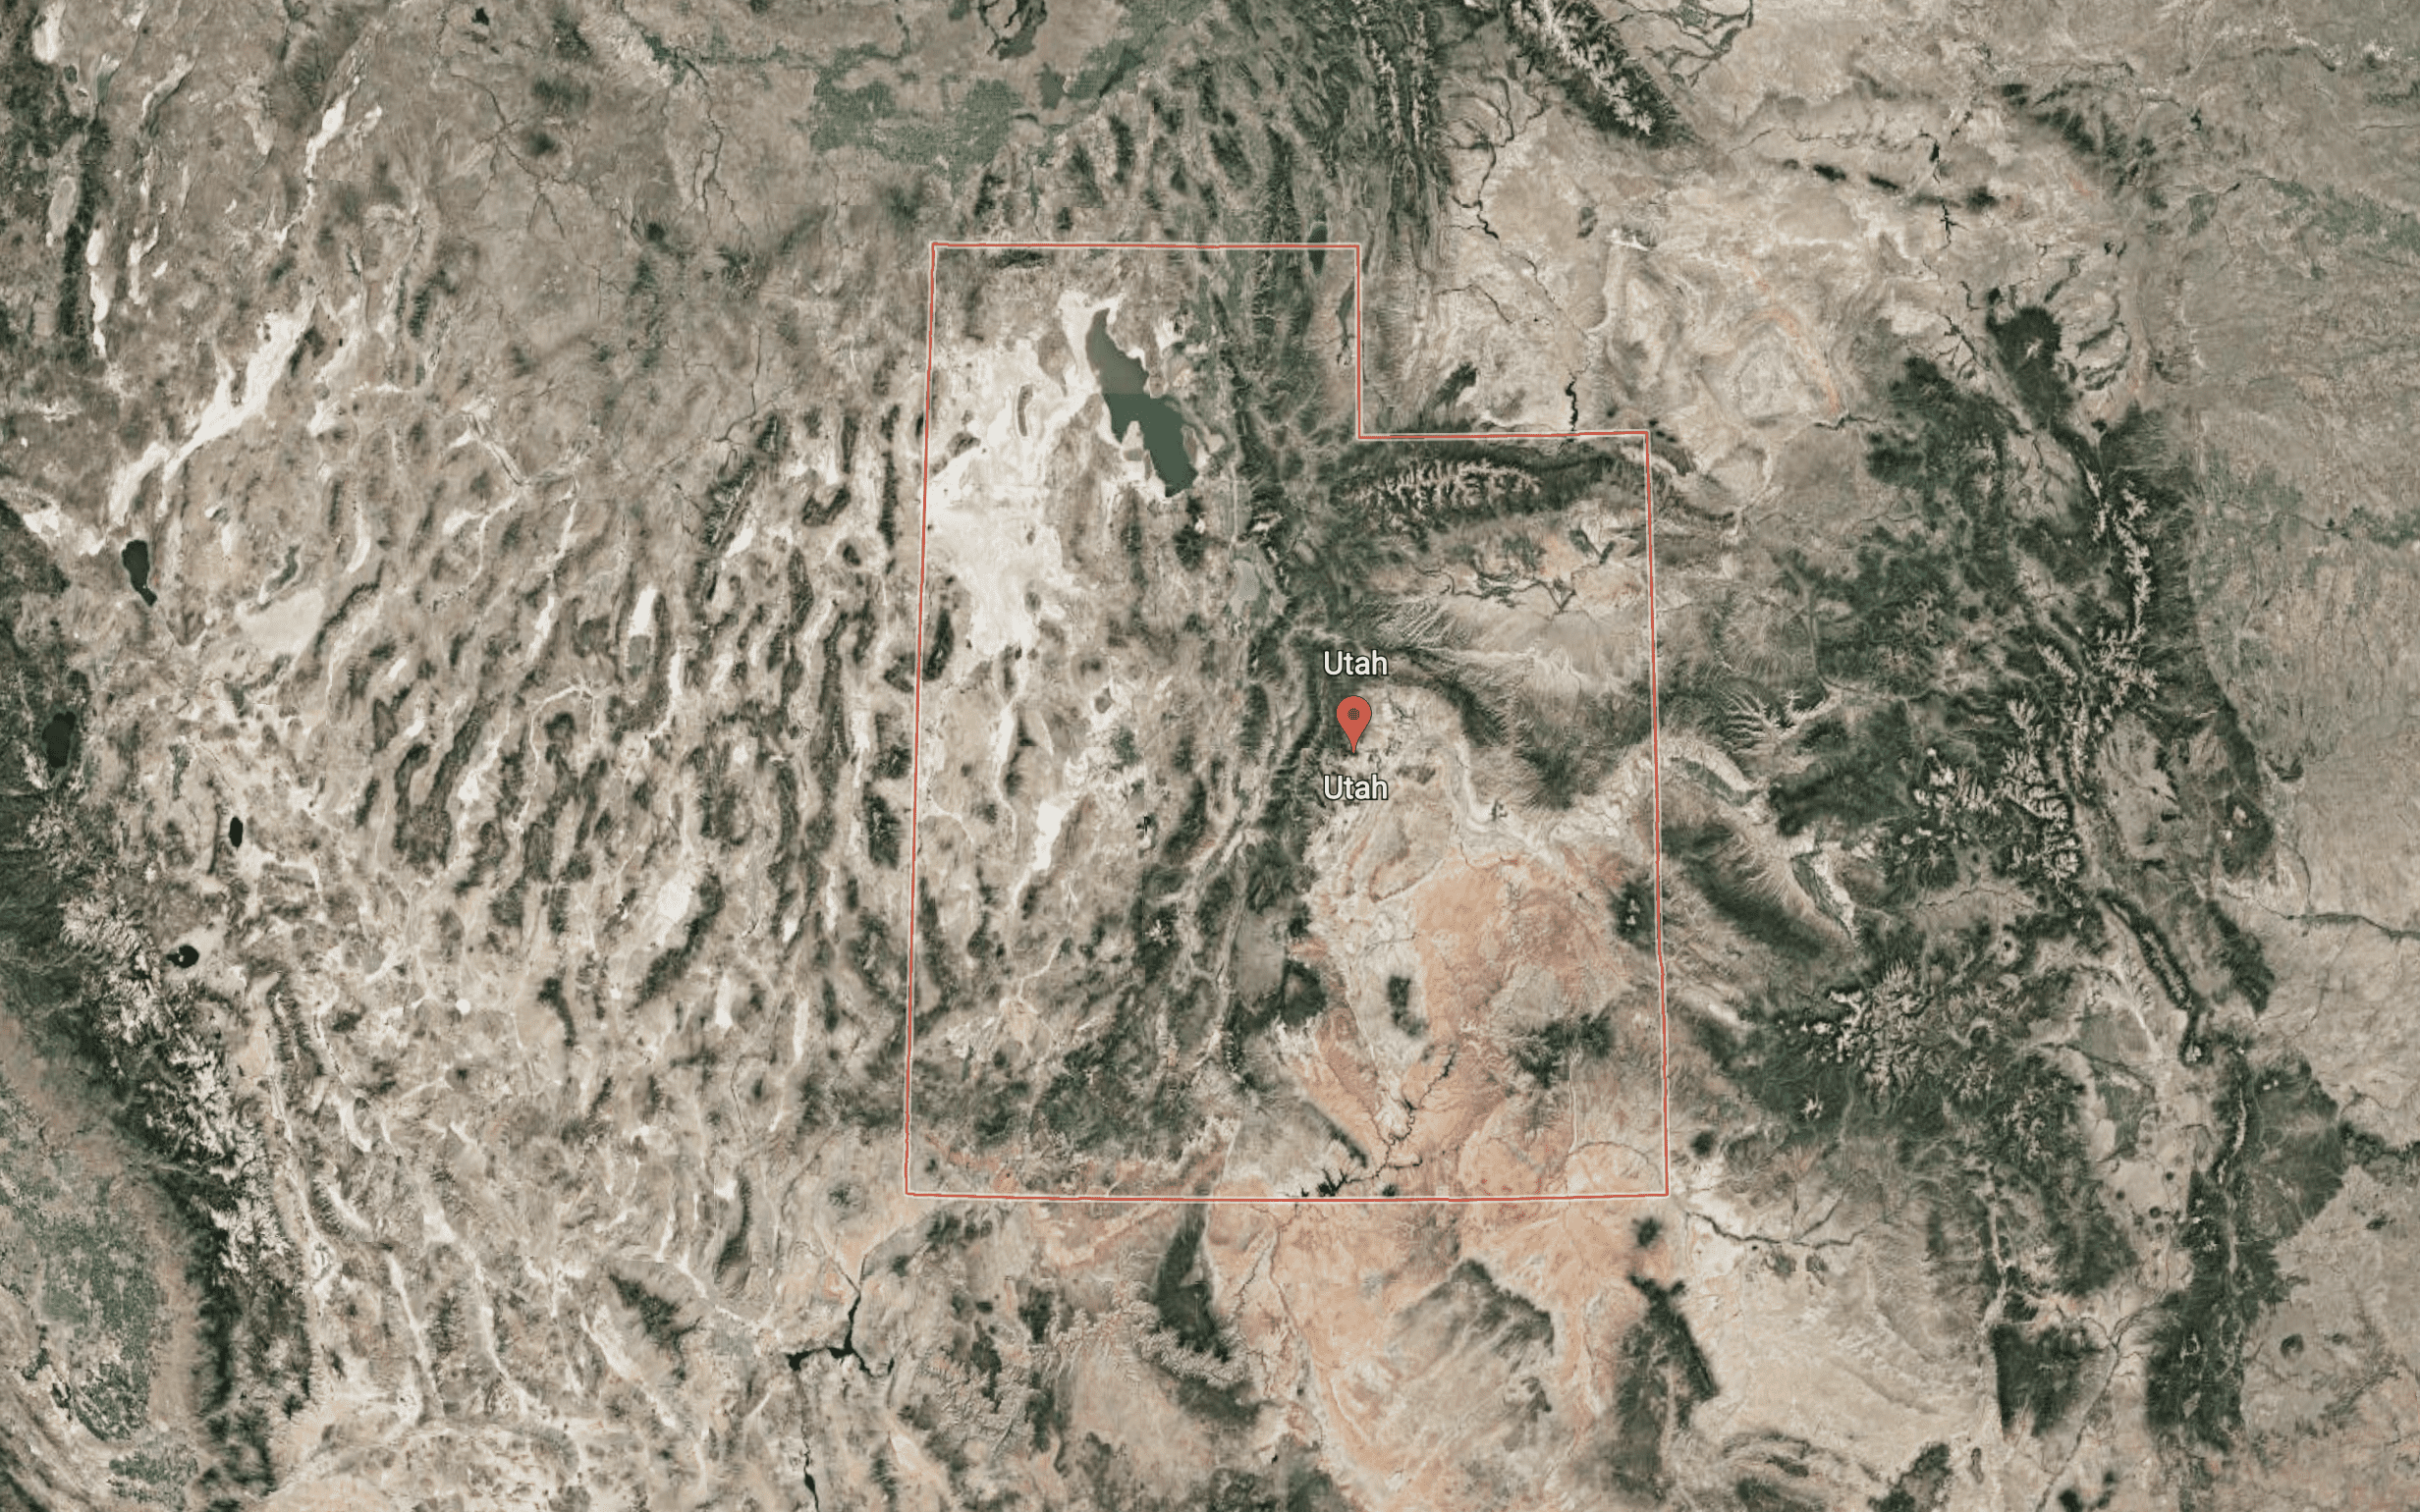 Satellite overhead image of Utah from Google Earth 2022